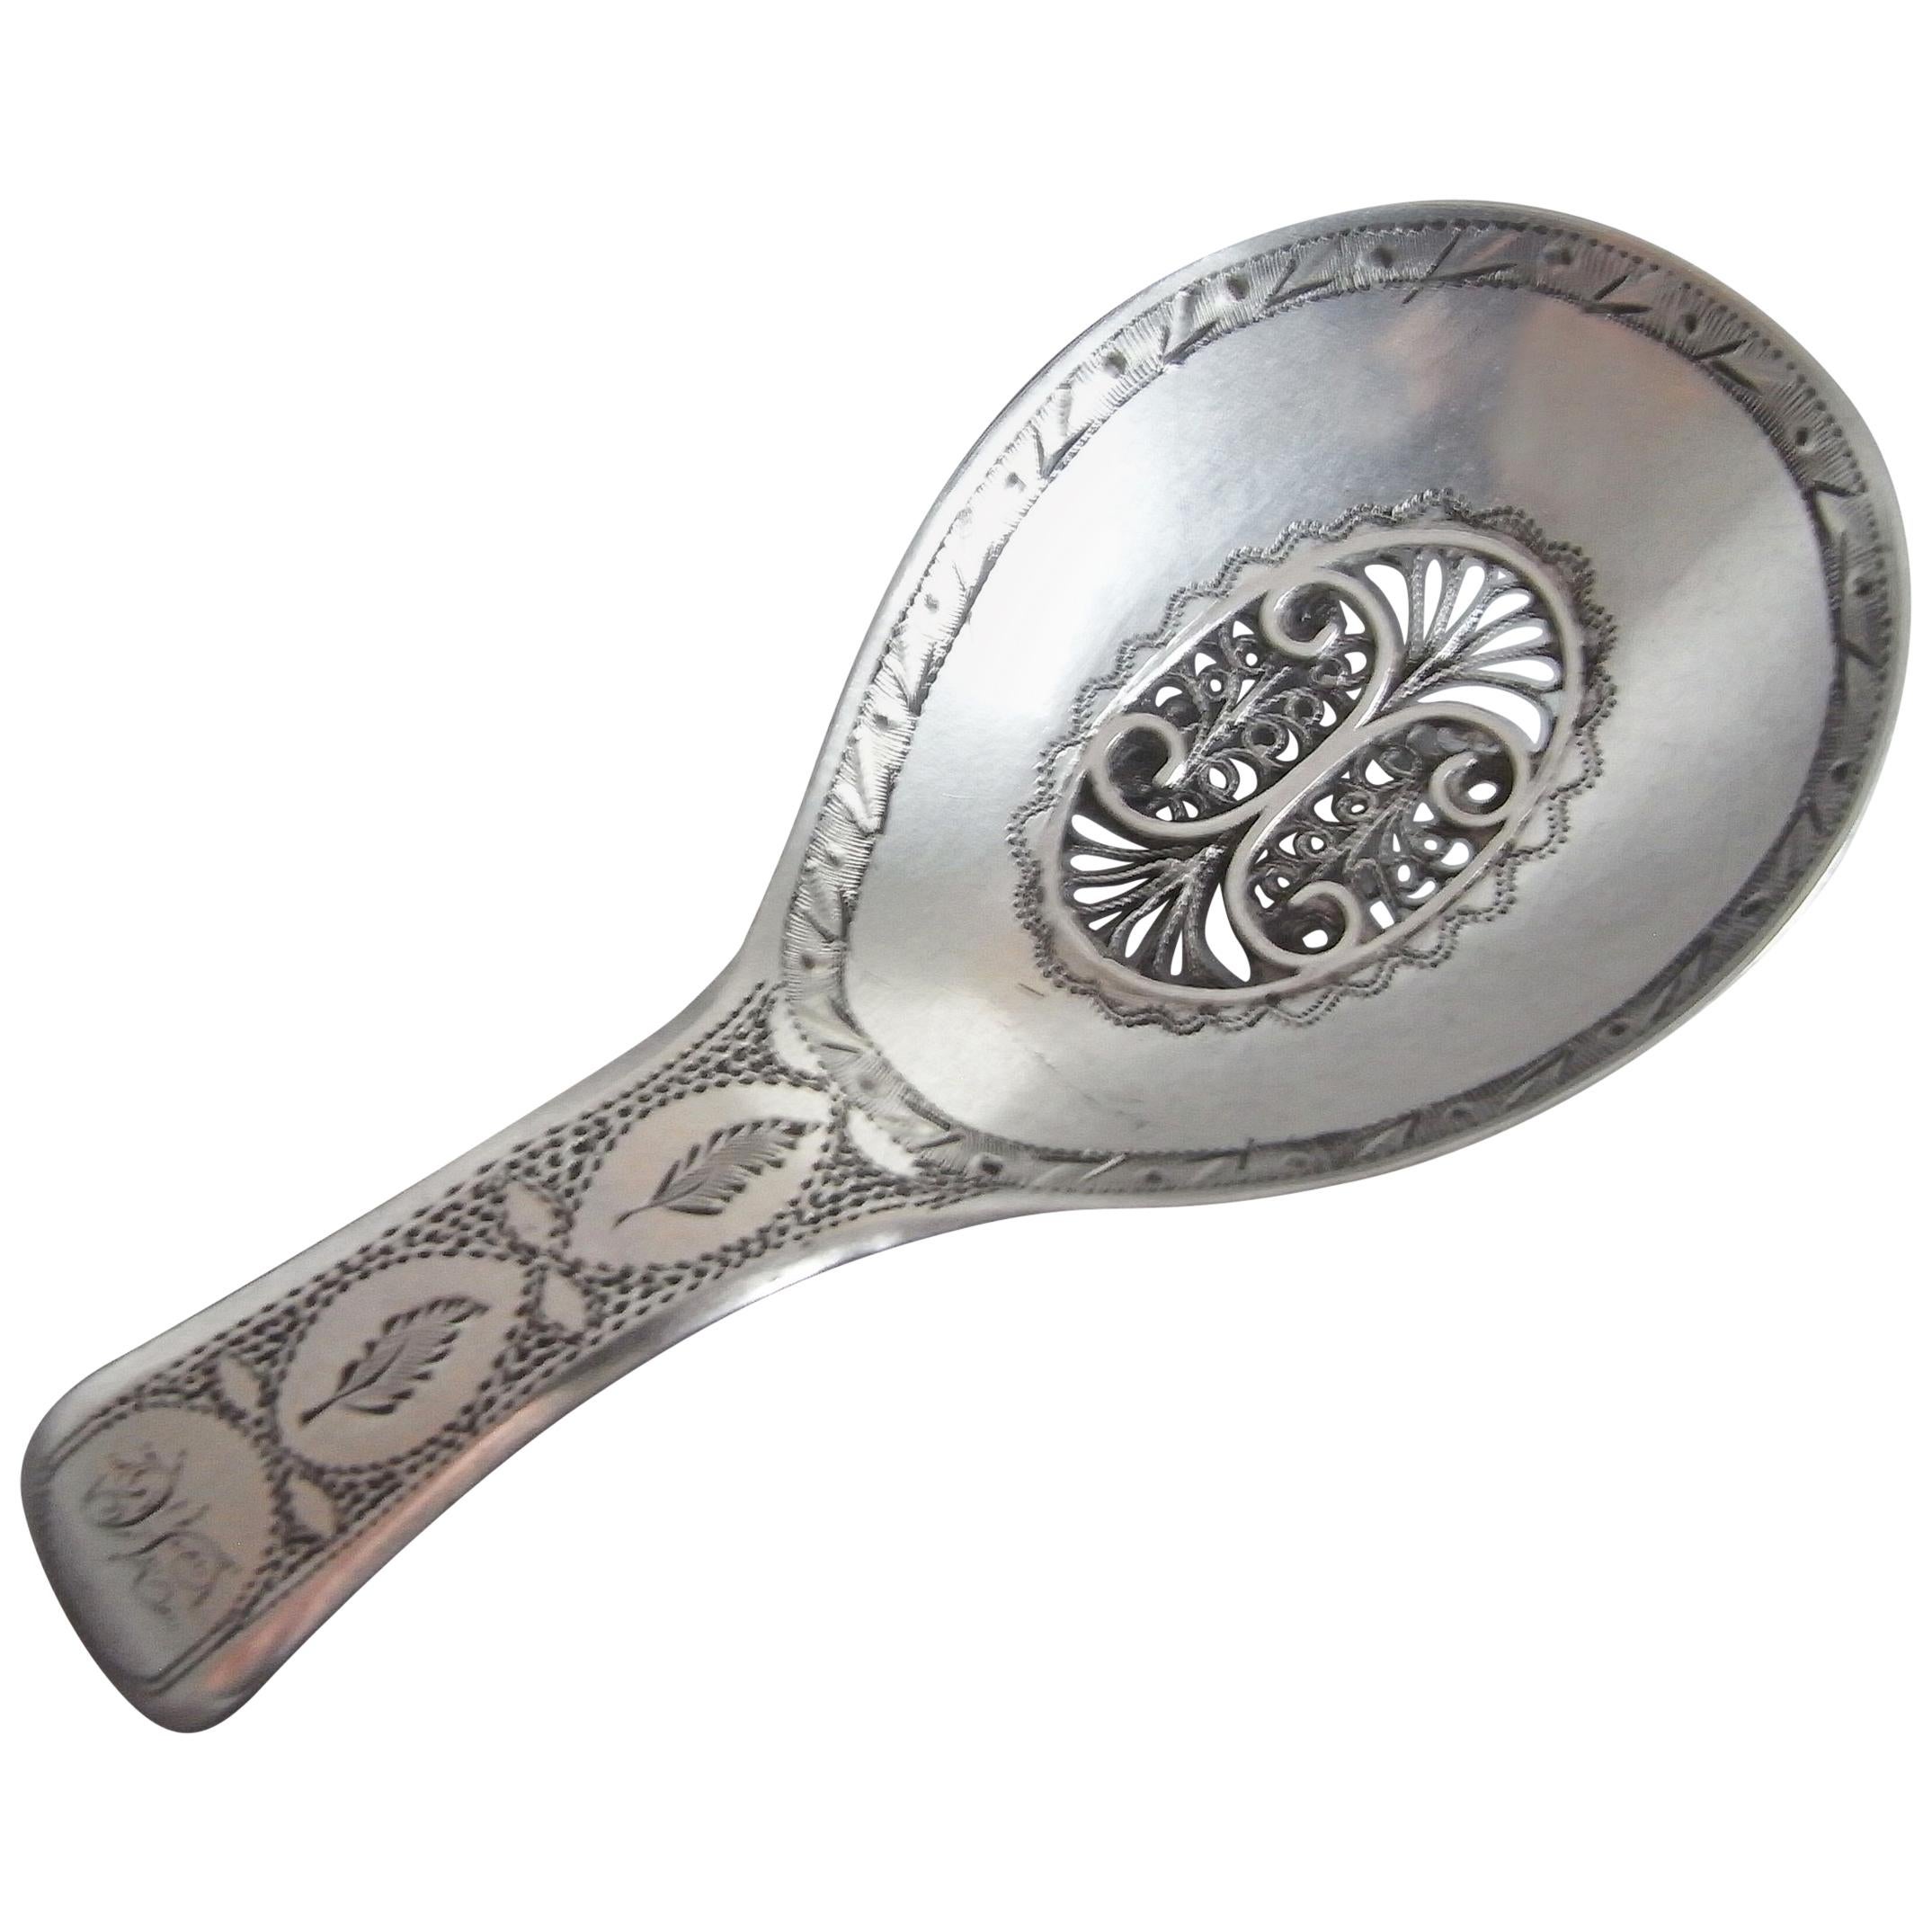 Very Fine George III Caddy Spoon by Samuel Pemberton